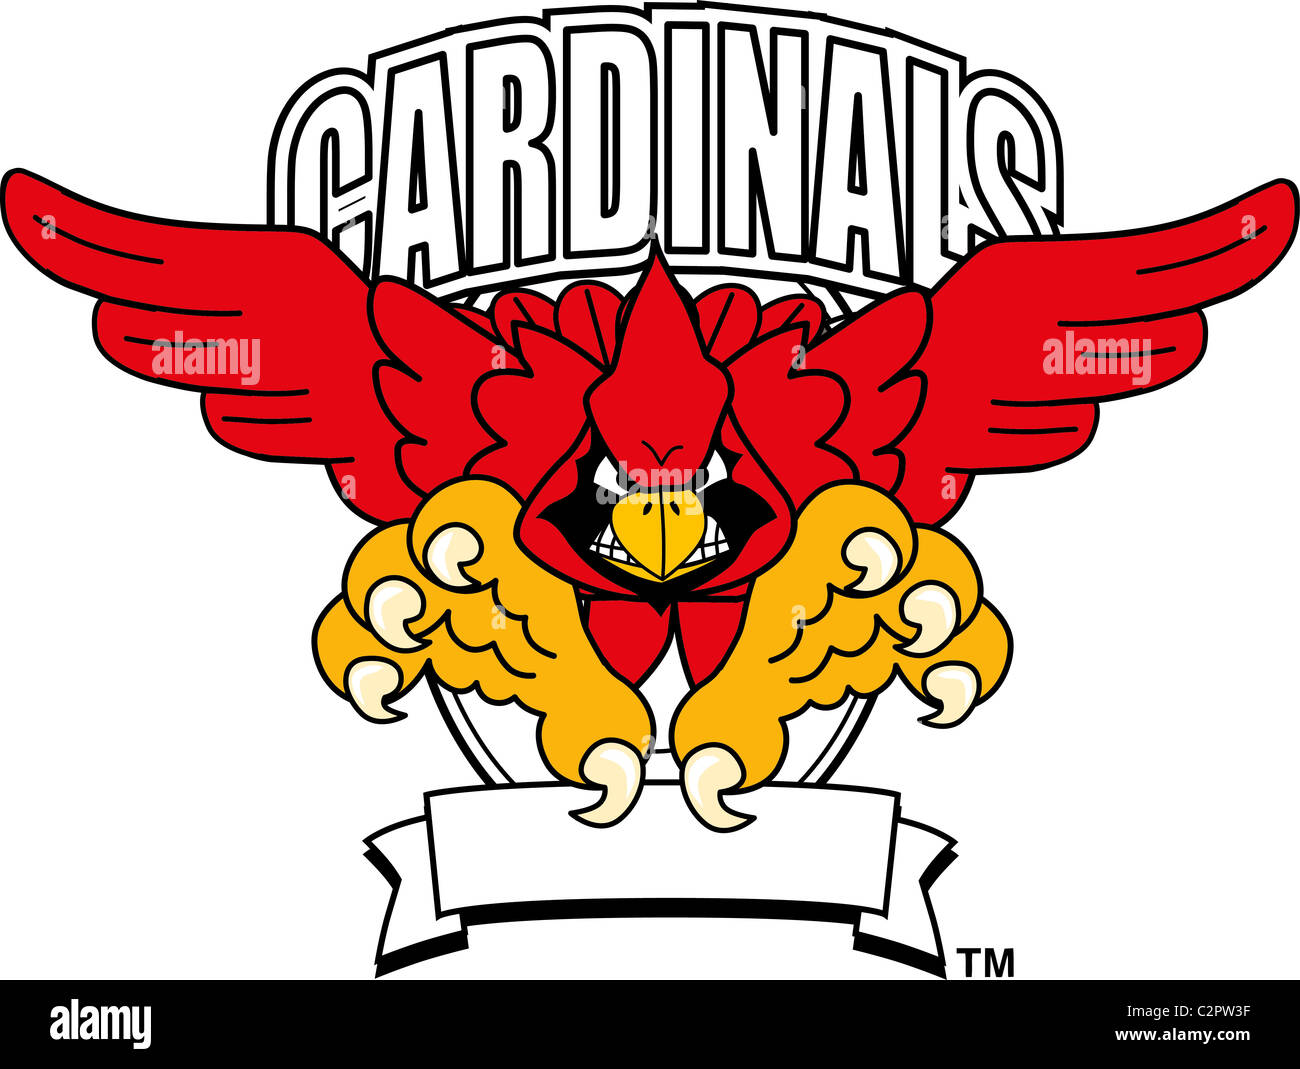 Cardinal mascot hi-res stock photography and images - Alamy